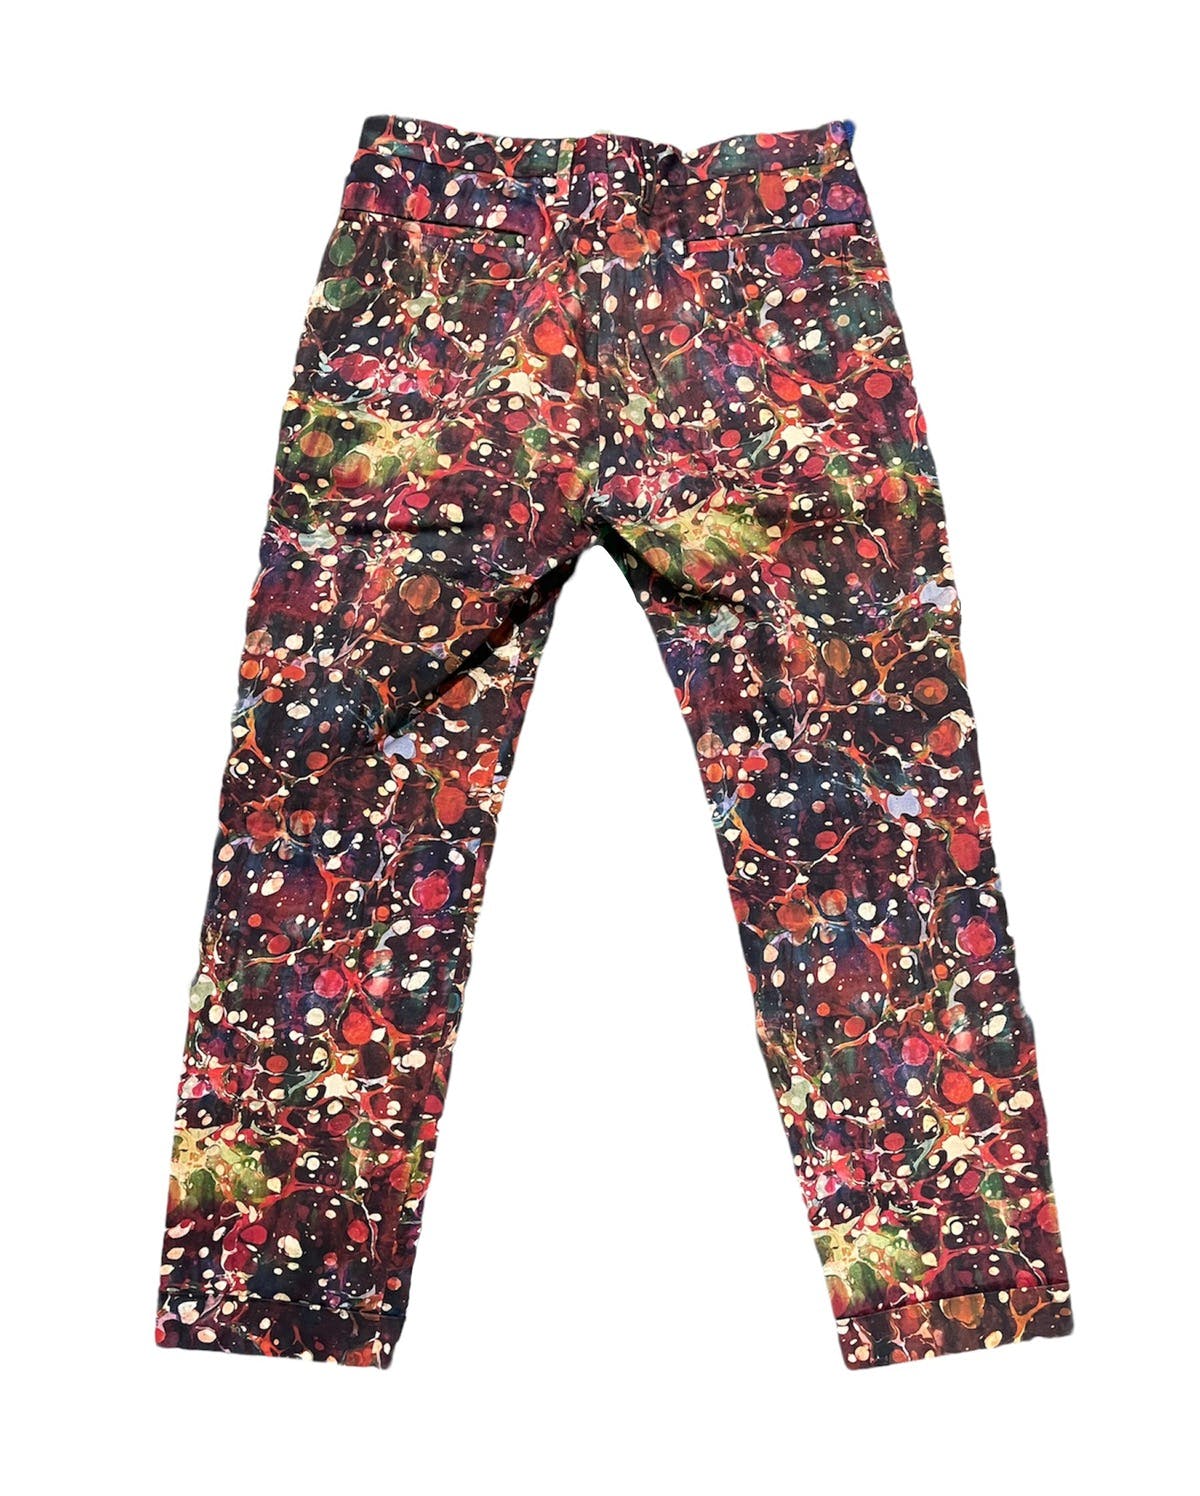 Paul smith khakis pants overprint art design - 2